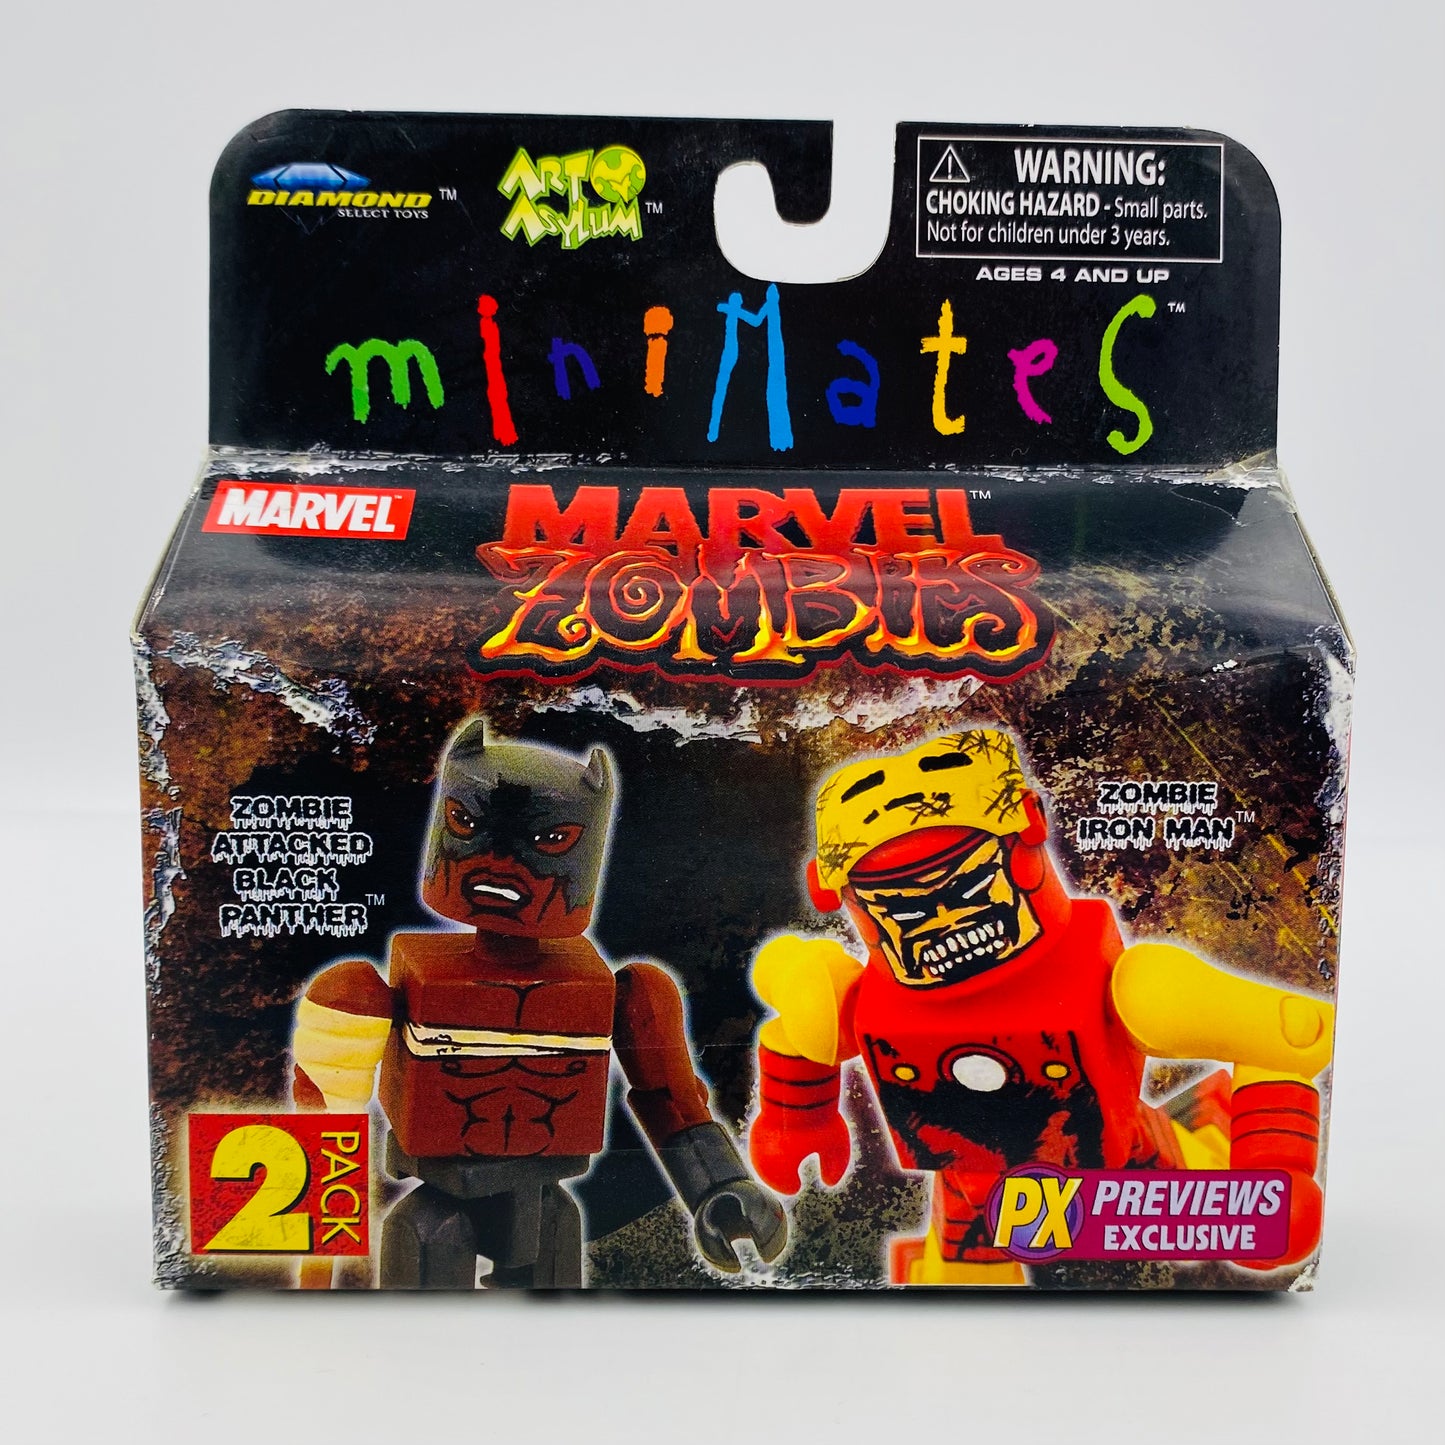 Minimates Marvel Universe Previews Exclusive Marvel Zombies Zombie Attacked Black Panther & Zombie Iron Man boxed 2" action figures (2008) Diamond Select Toys & Art Asylum